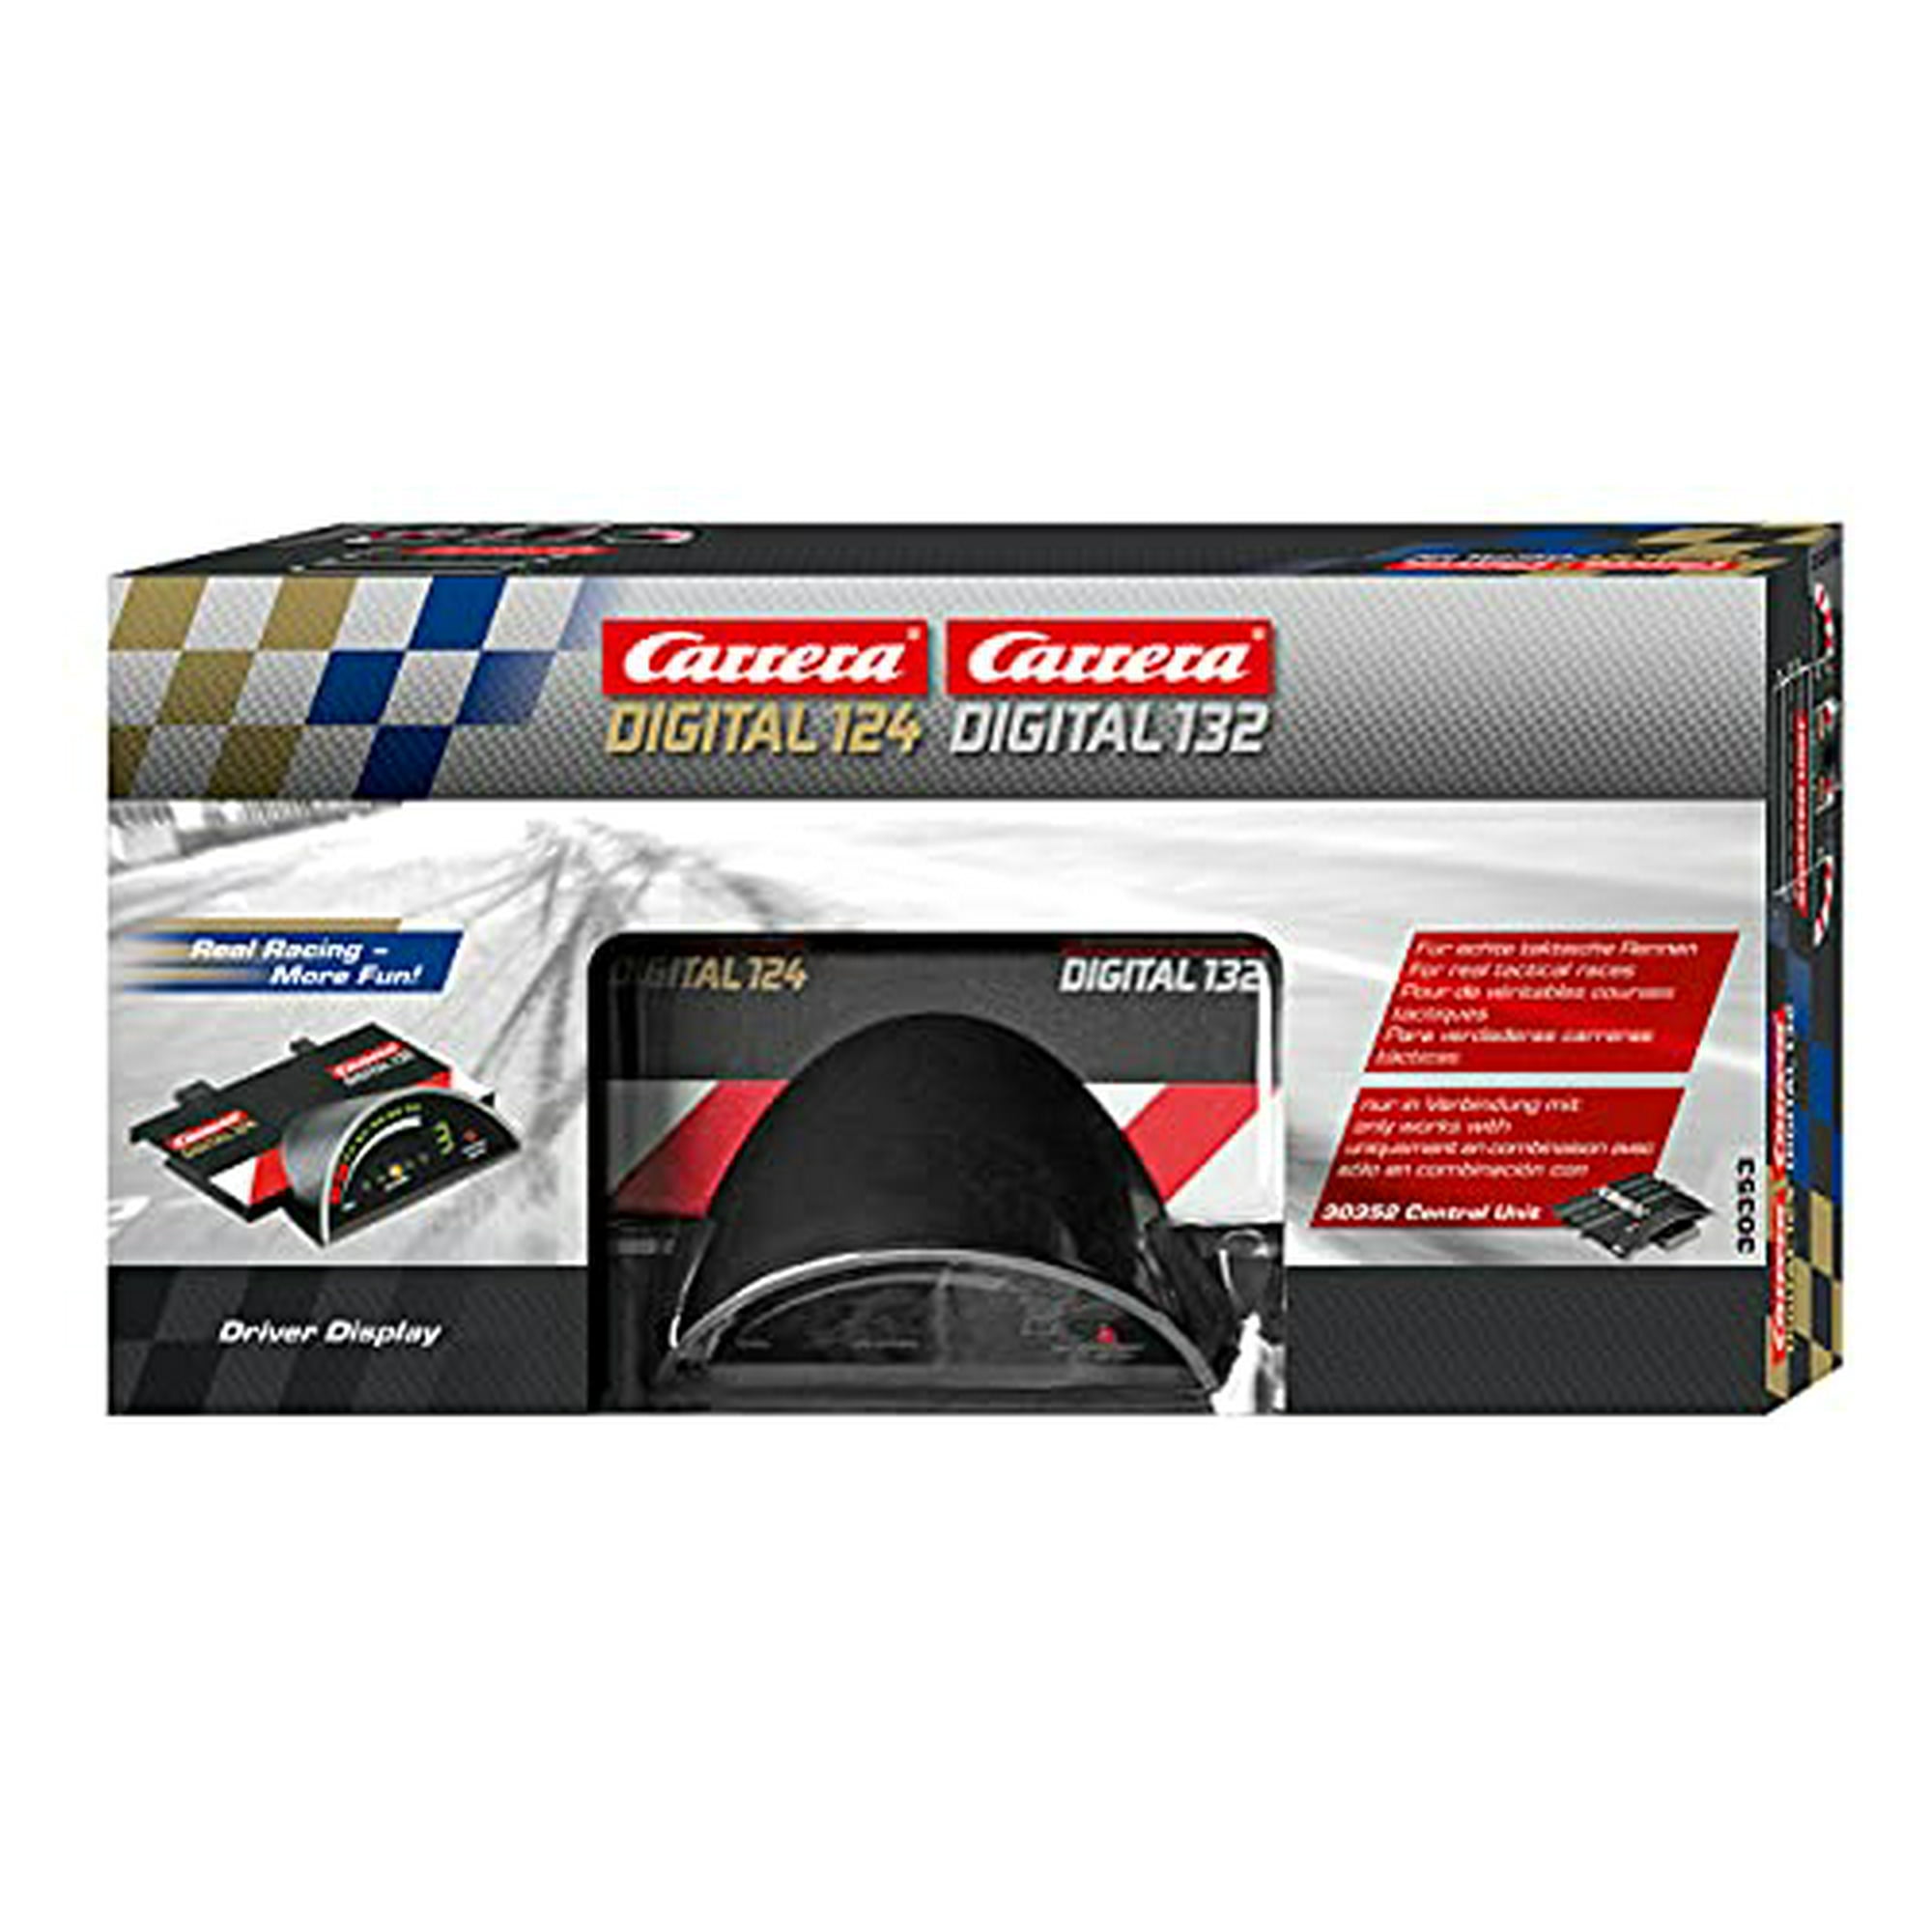 Carrera Digital 124/132 Driver Display | Walmart Canada